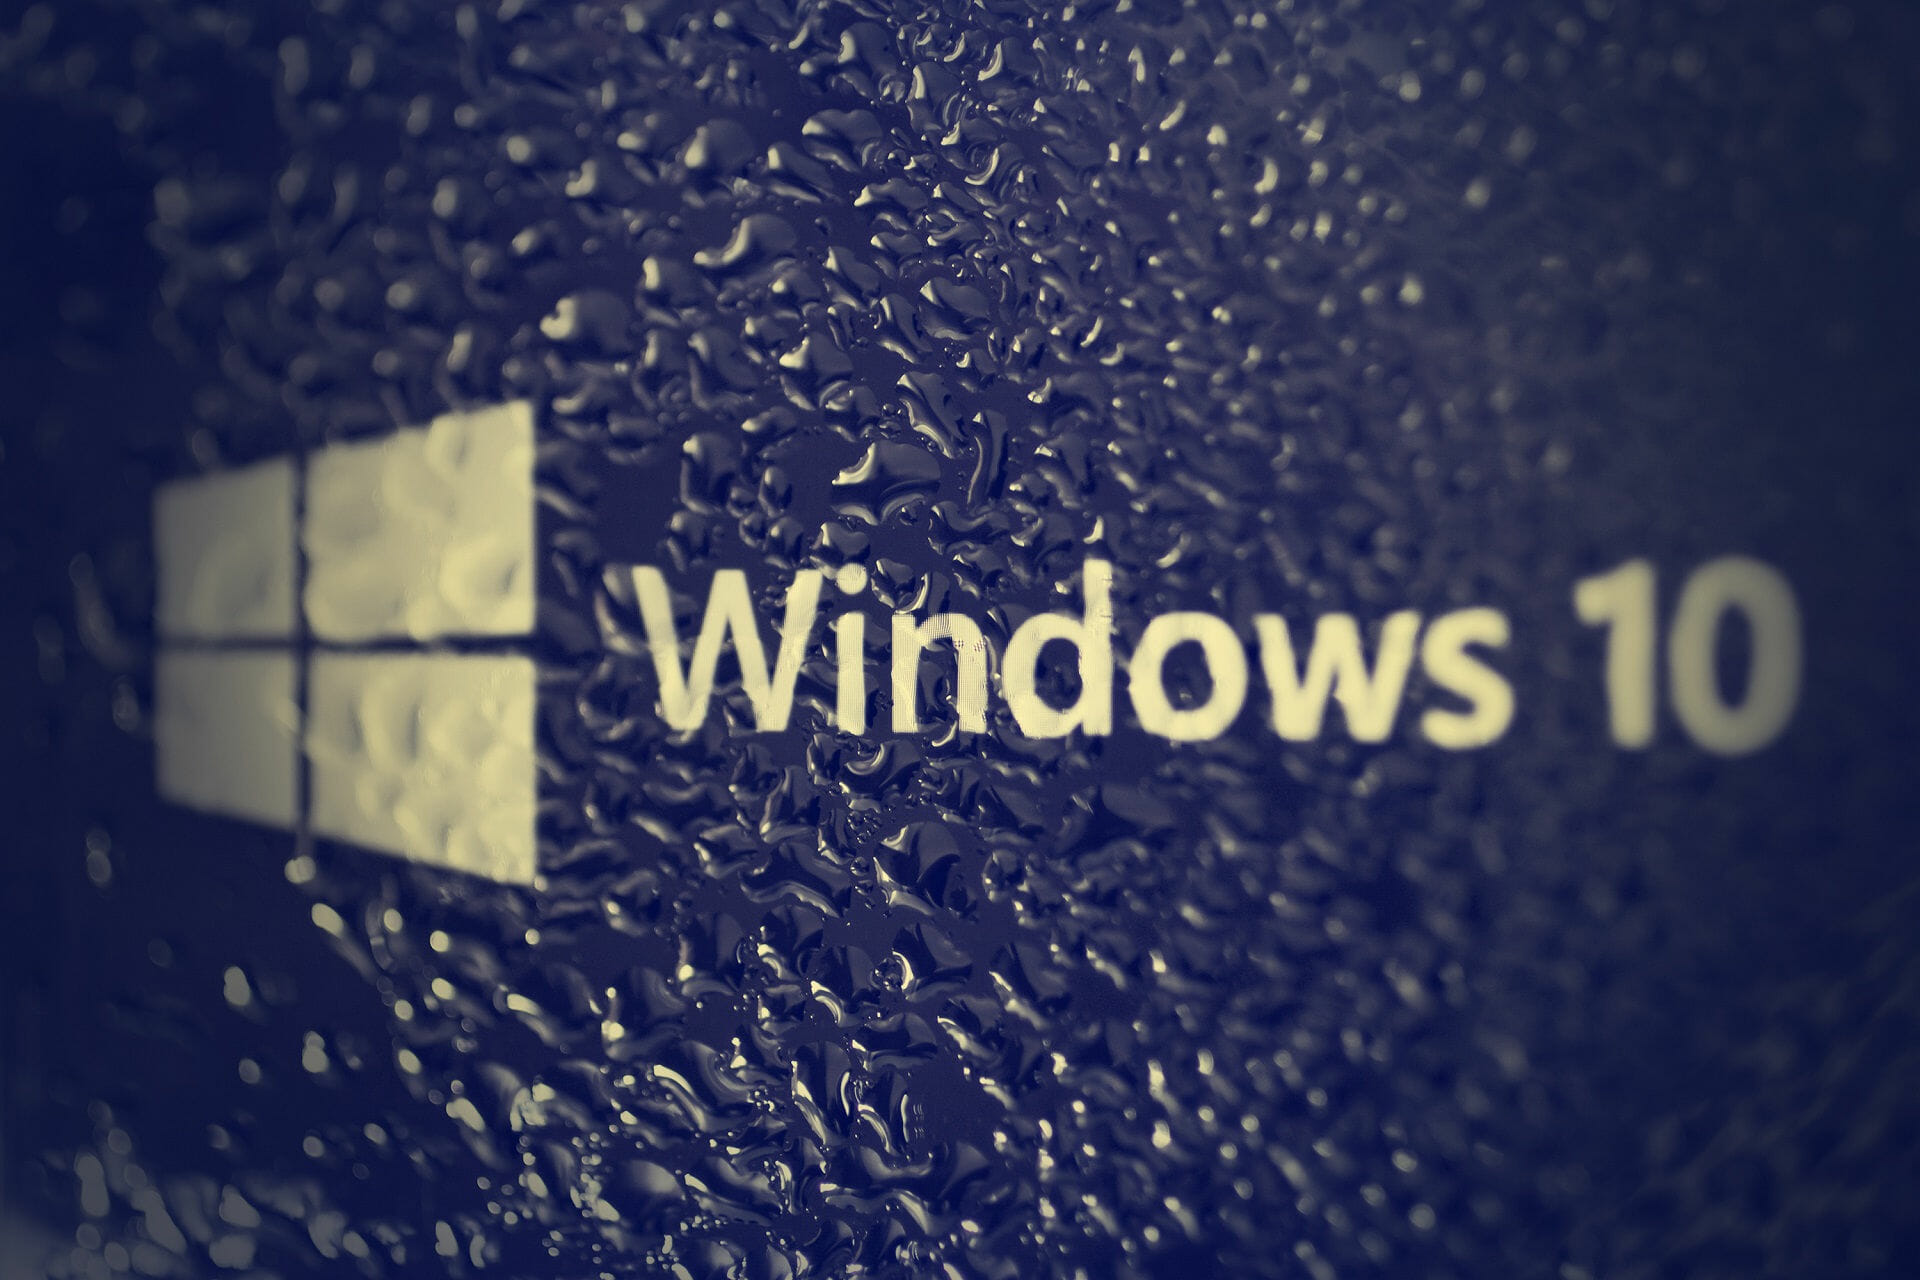 Windows 10 new design features